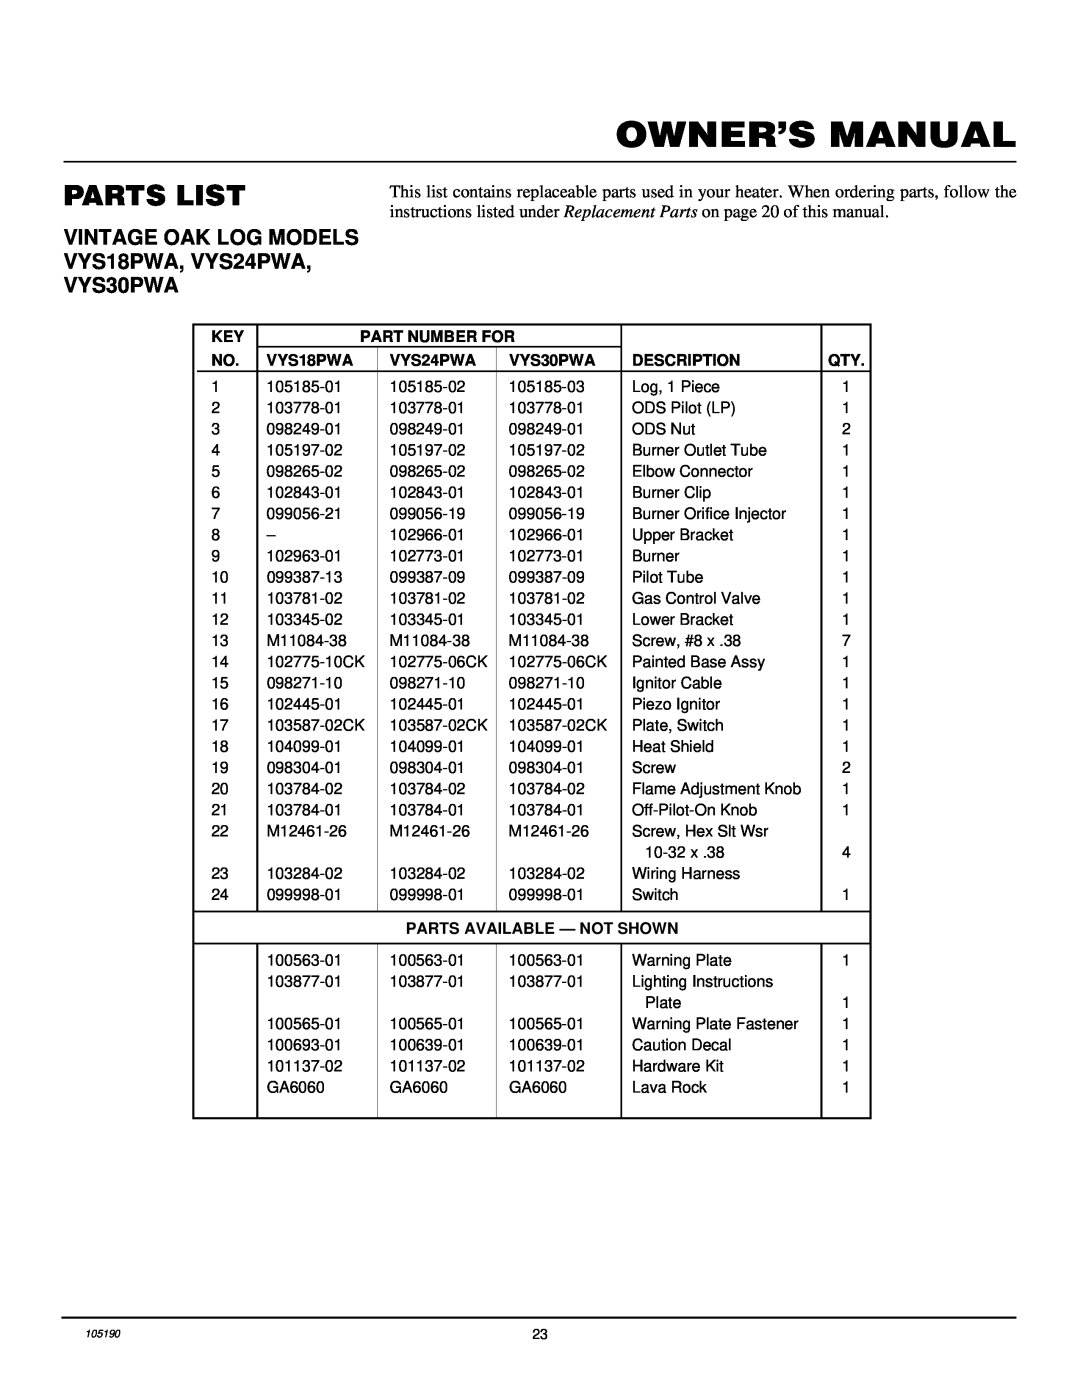 Vanguard Heating VYS18PWA Parts List, Part Number For, VYS24PWA, VYS30PWA, Description, Parts Available - Not Shown 